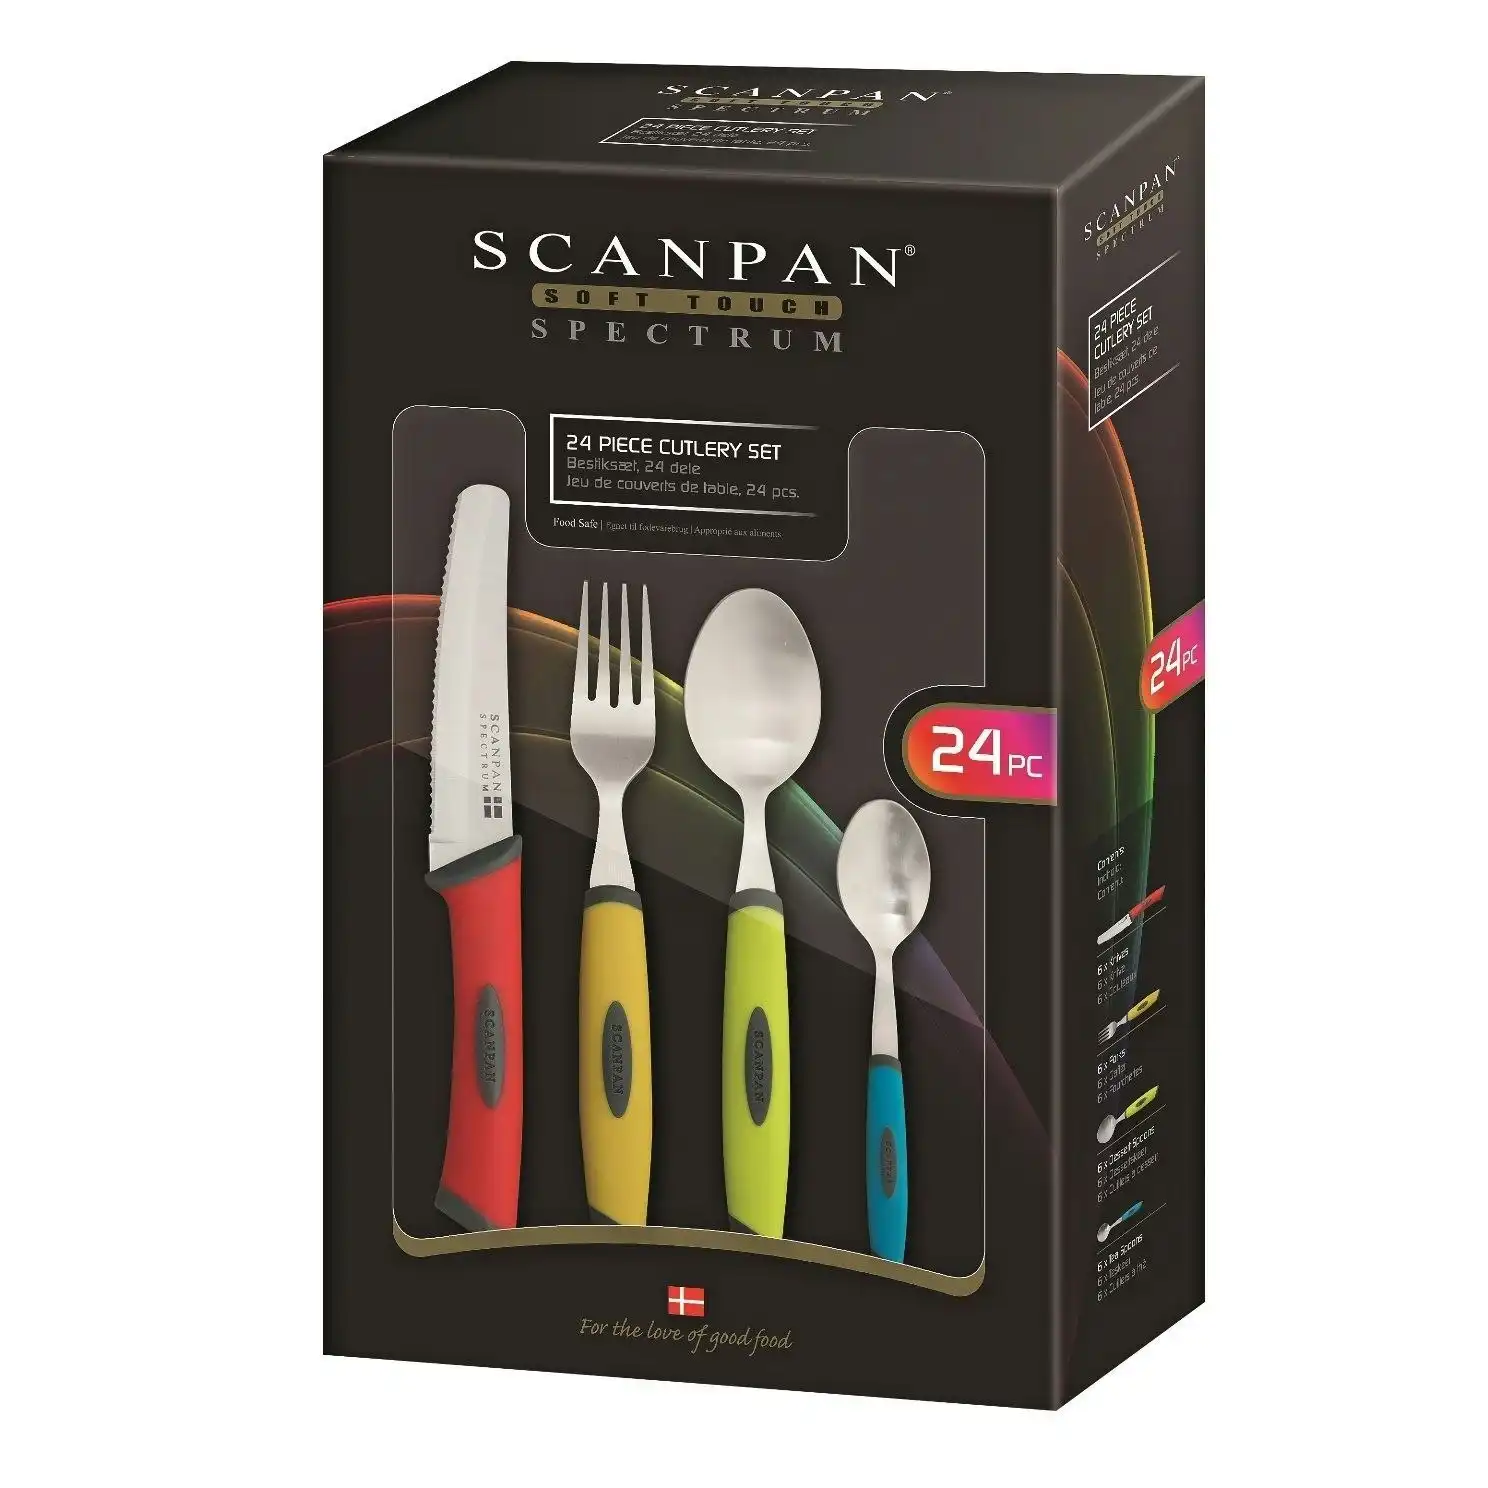 Scanpan Soft Touch Spectrum 24 Piece Cutlery Set   Coloured